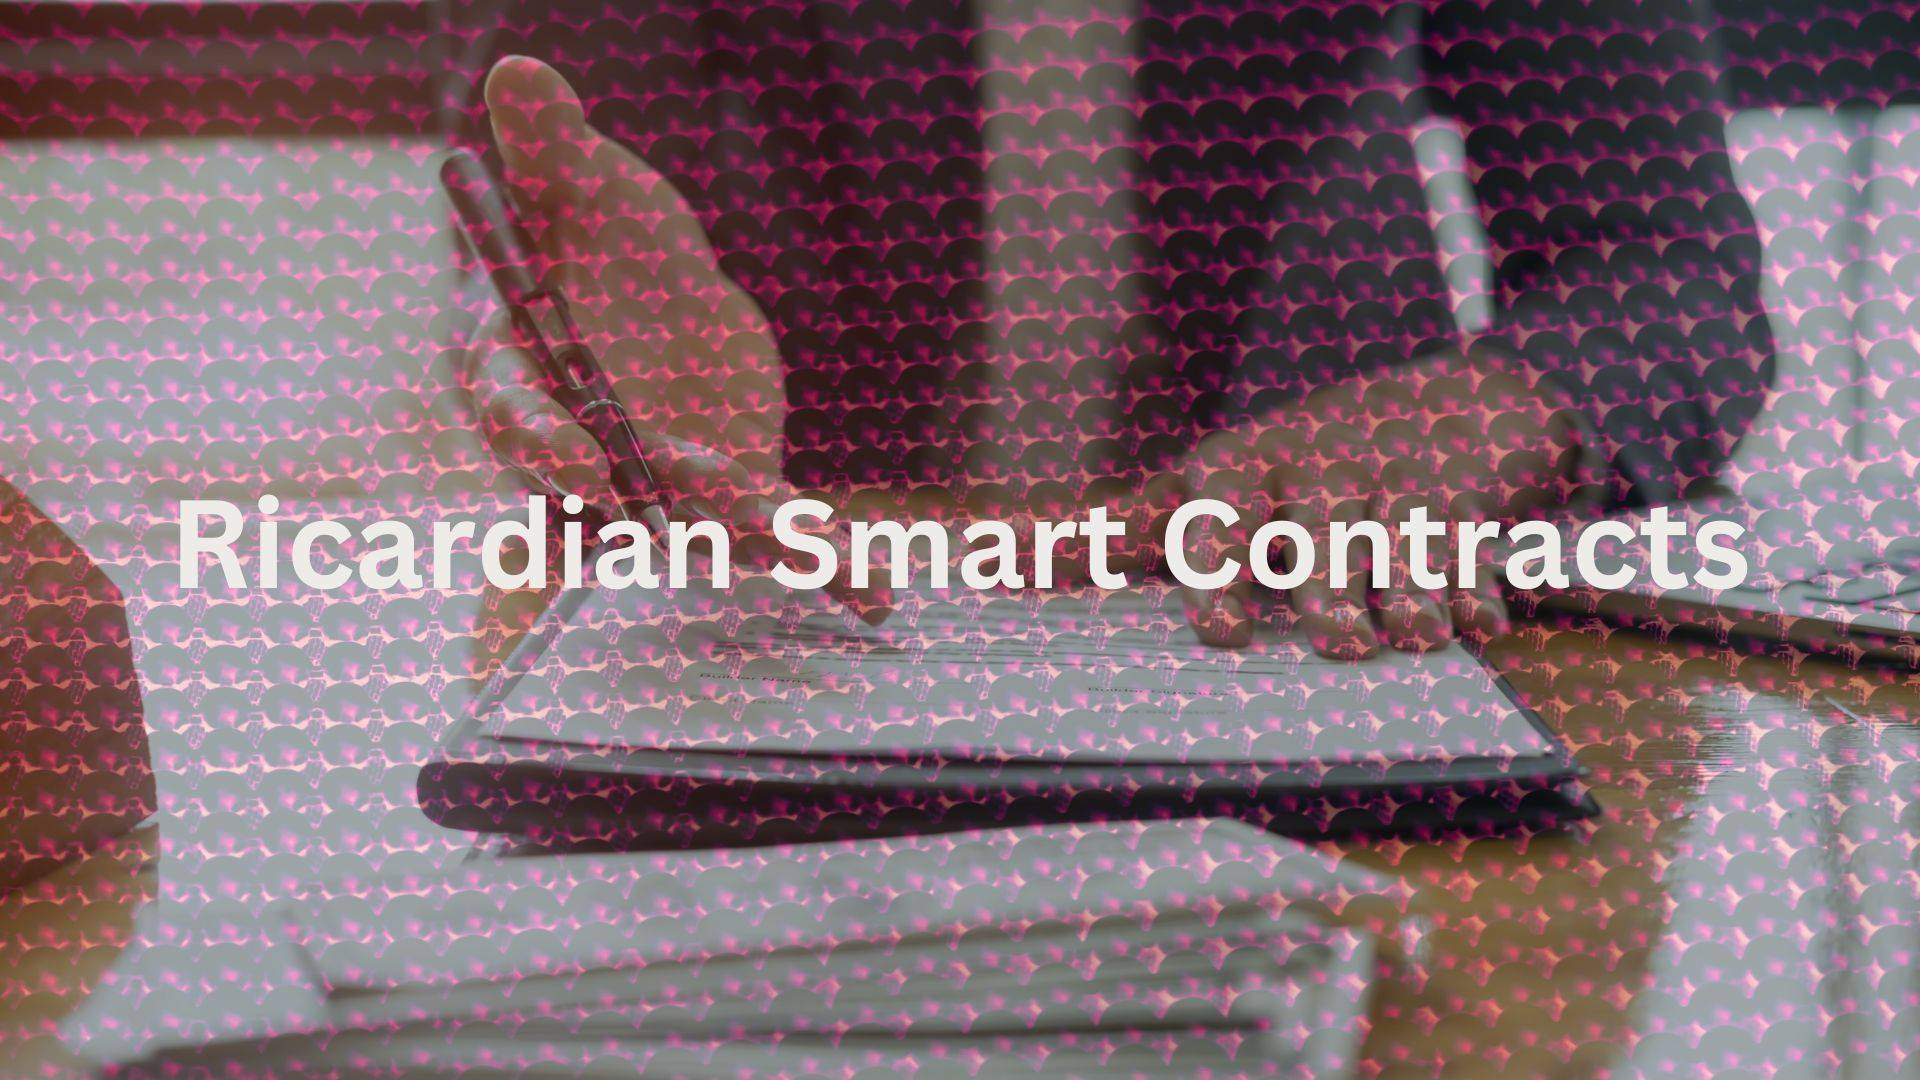 Memahami Ricardian Smart Contracts! Jenis Smart Contract Legal di Dunia Blockchain